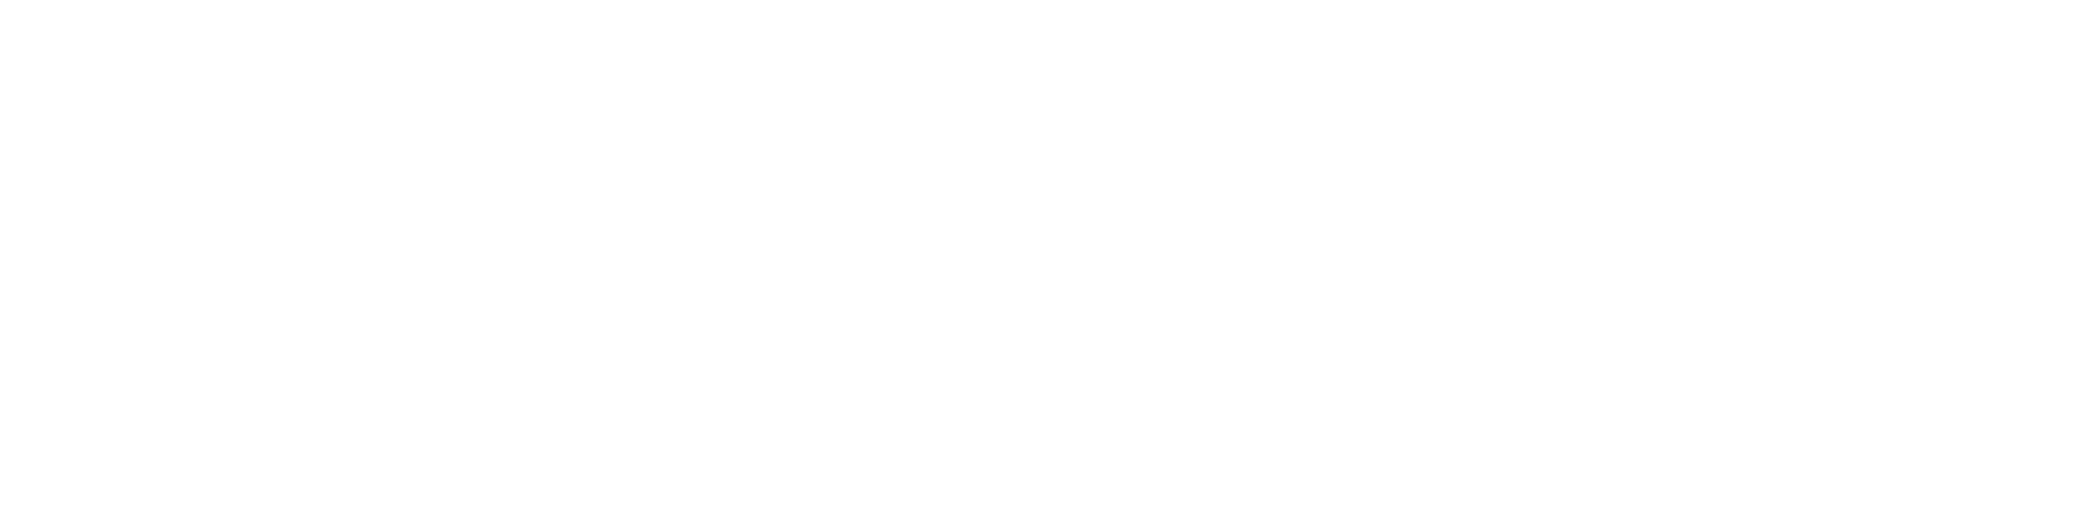 Hardwood Logo - Allwood - The hardwood flooring company that cares.Allwood